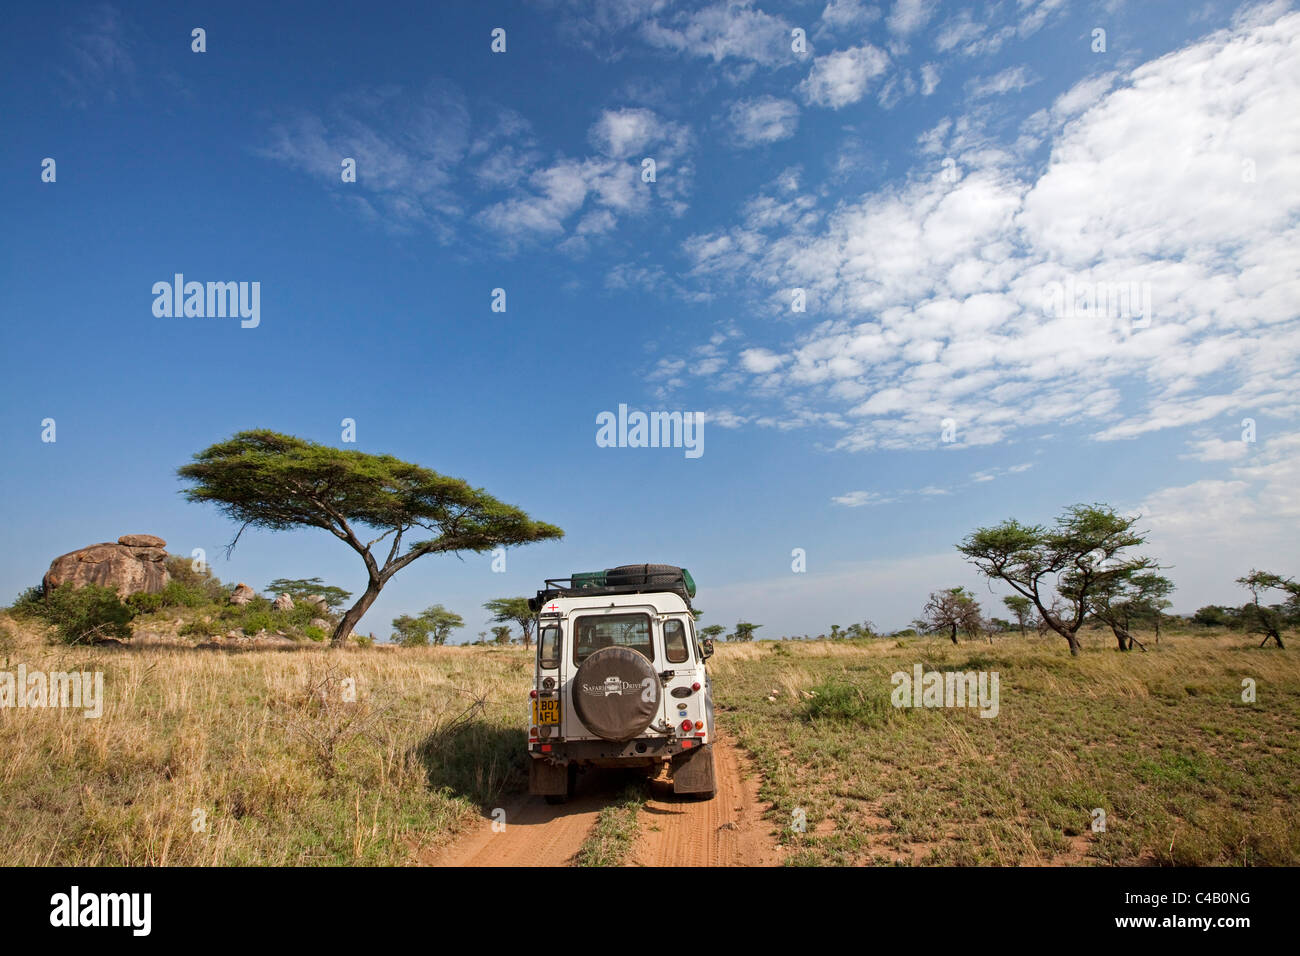 Tanzania, Serengeti. A Land Rover drives through some typical Serengeti landscape around the Maasai Kopjes. Stock Photo